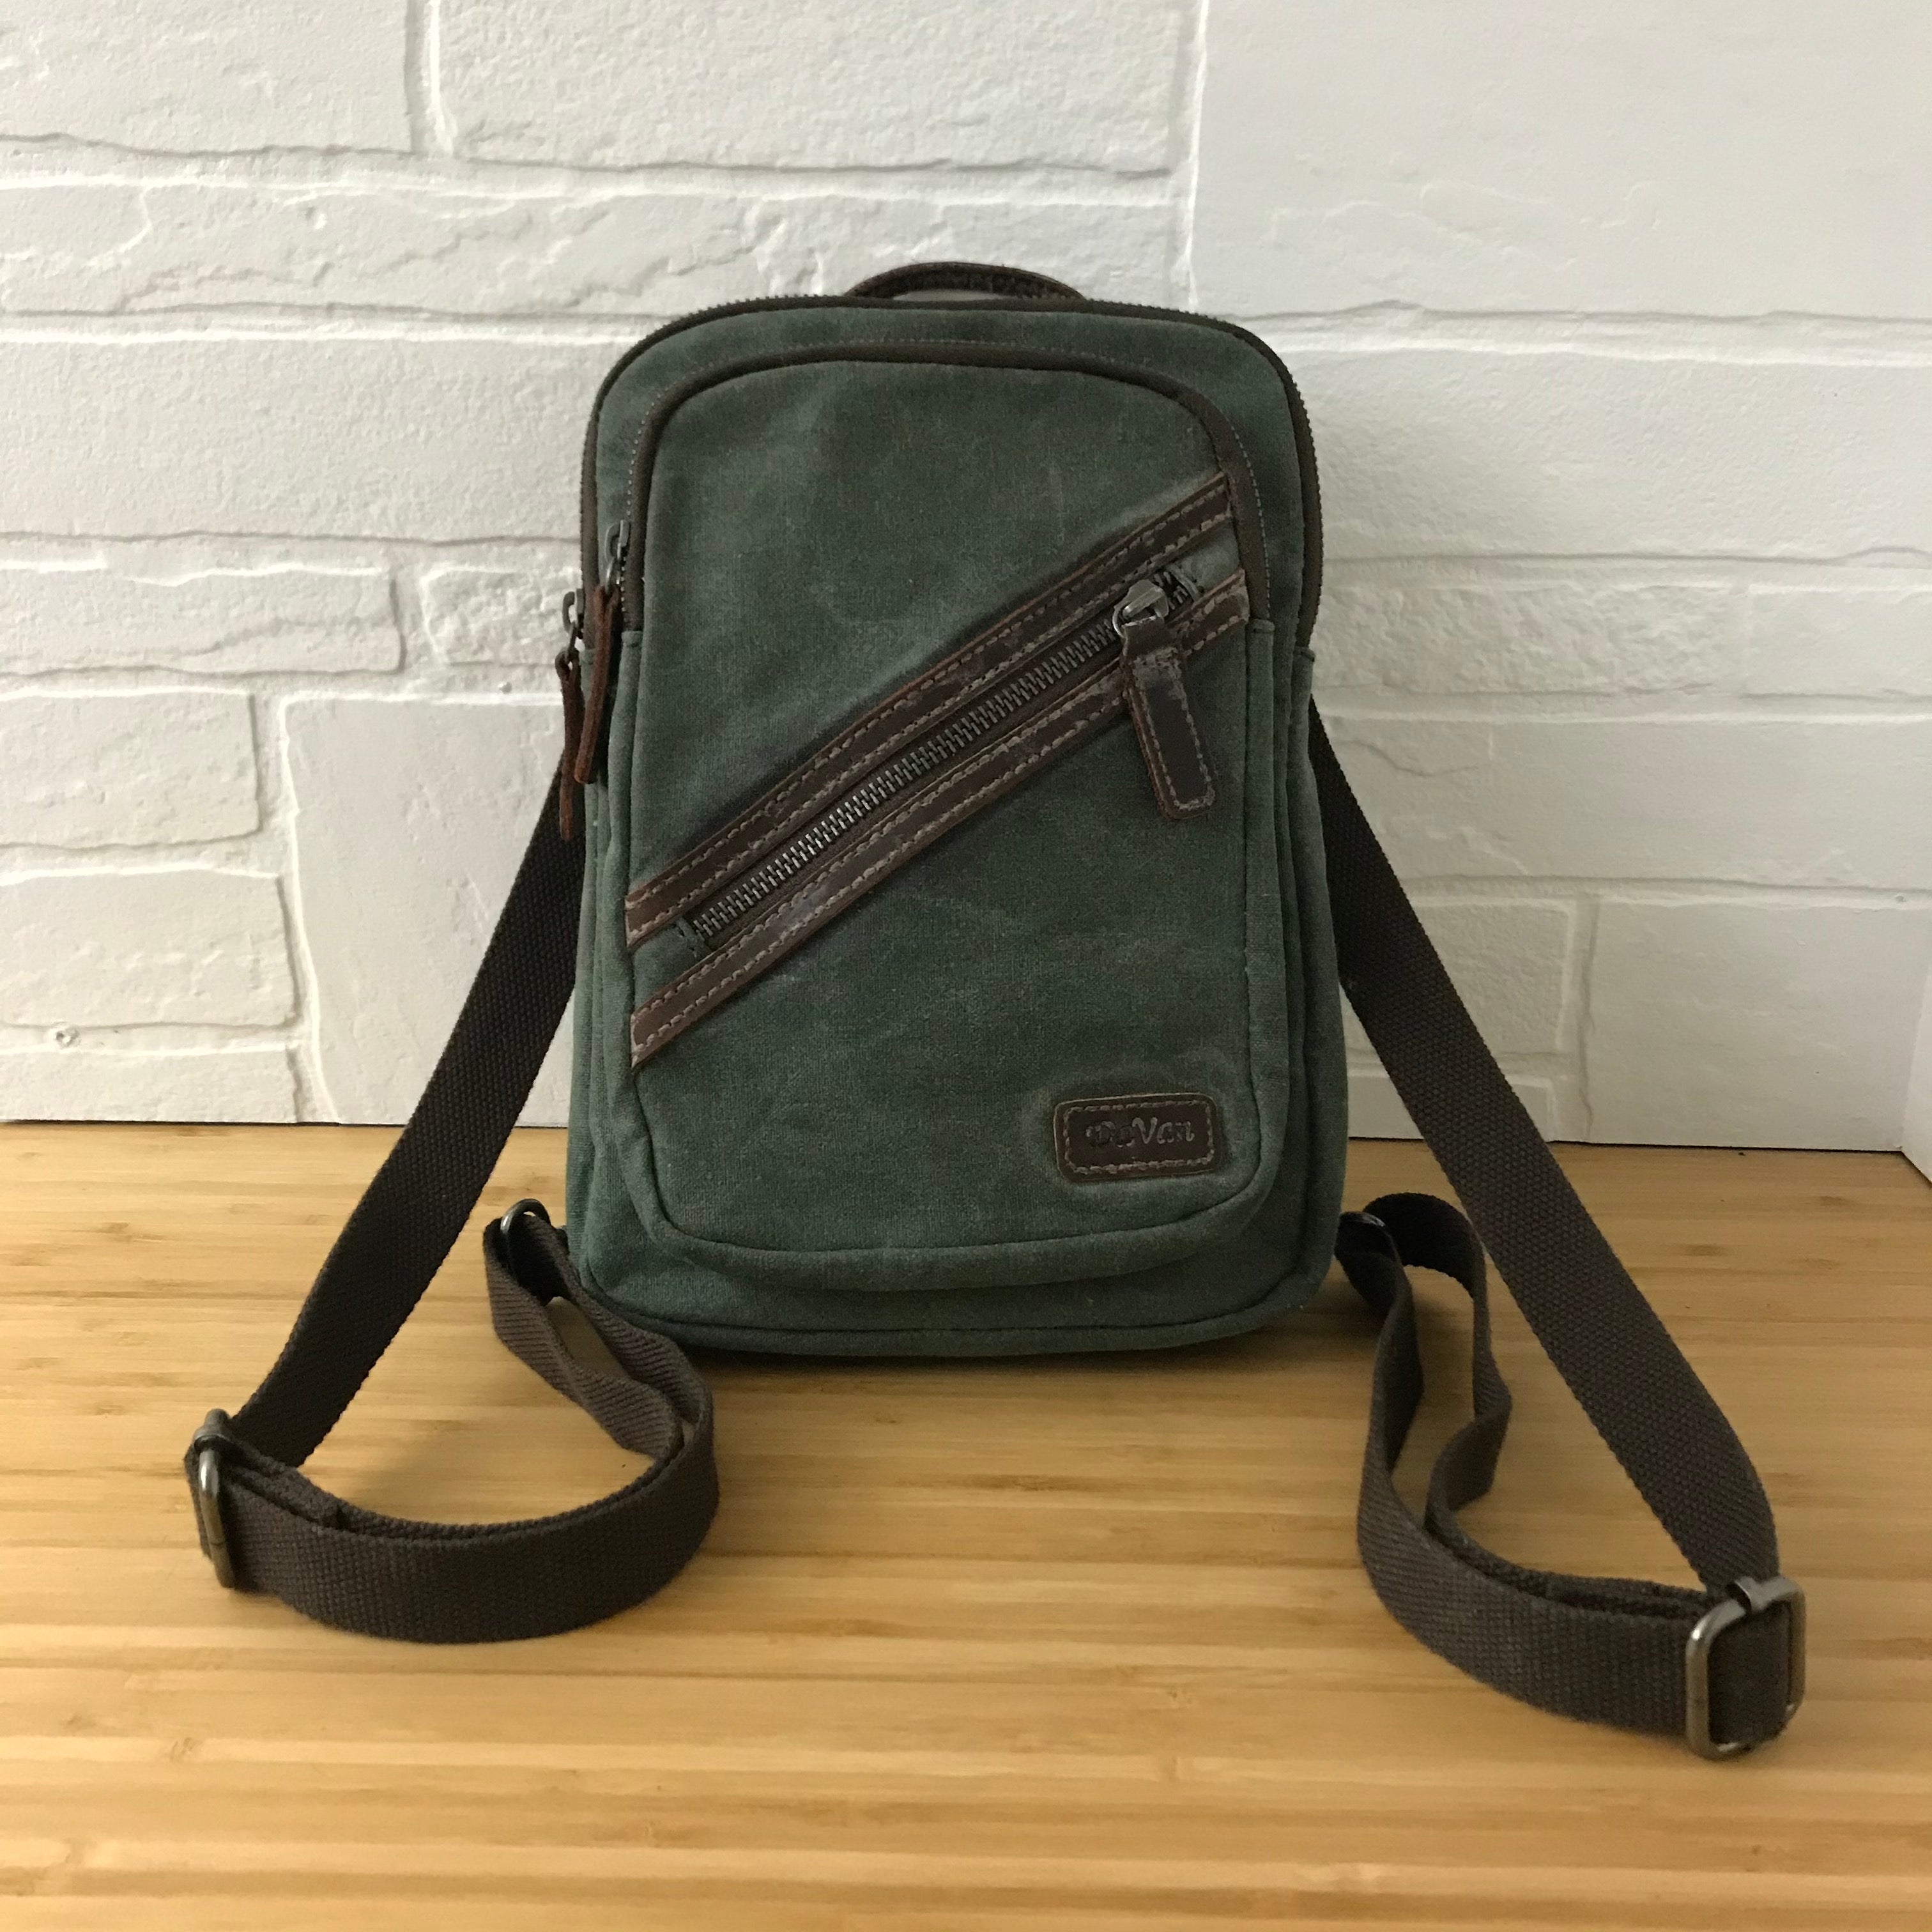 daVan backpack / small shoulder bag - green